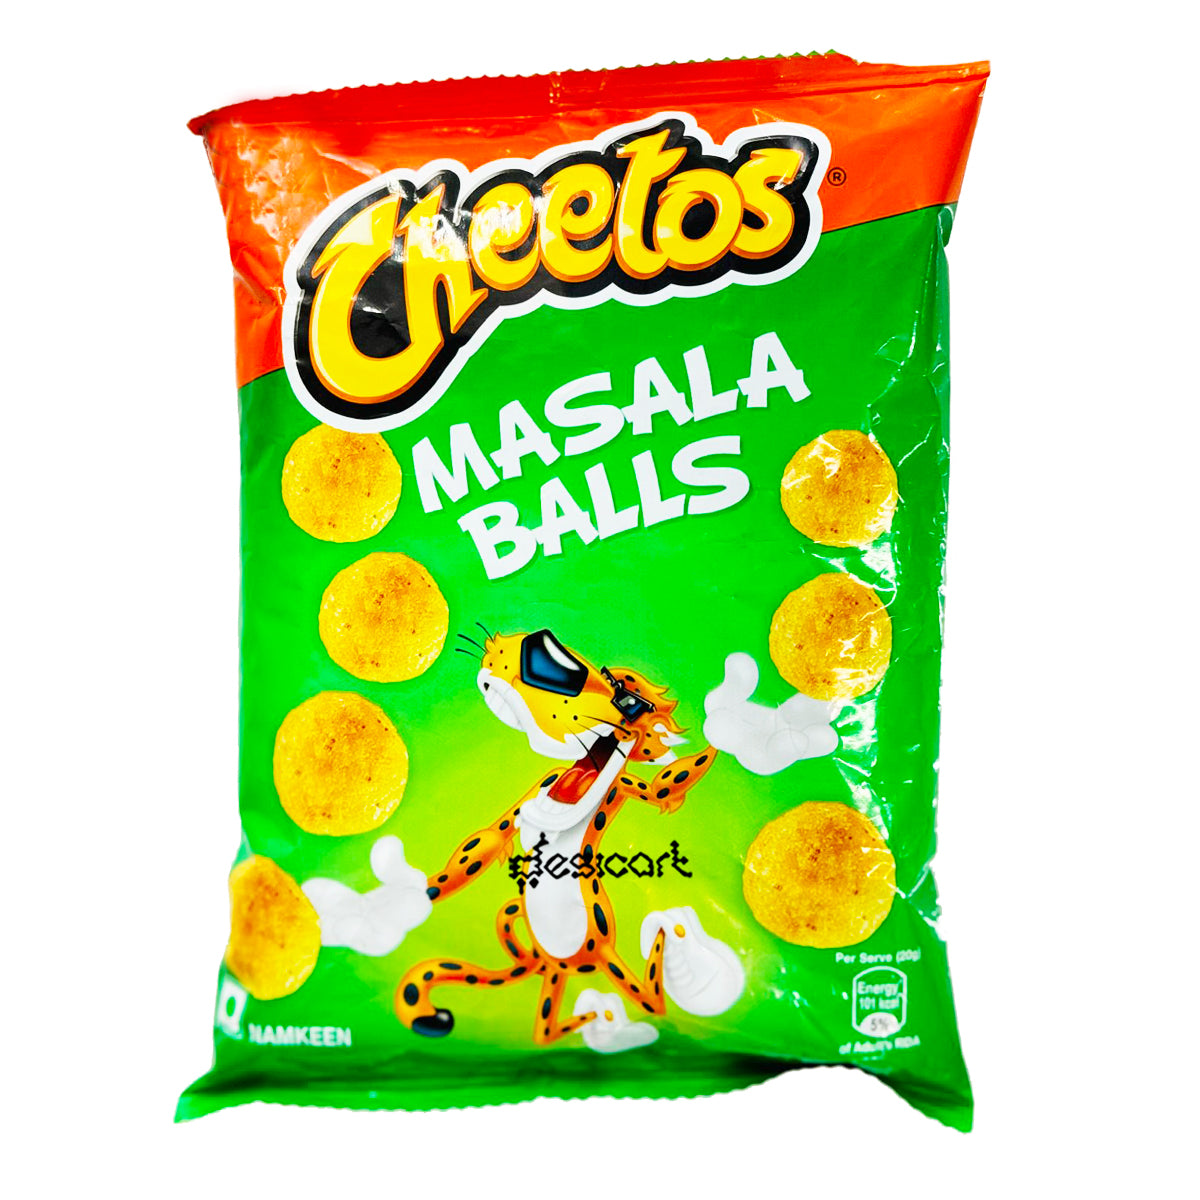 Cheetos Masala Balls 28g